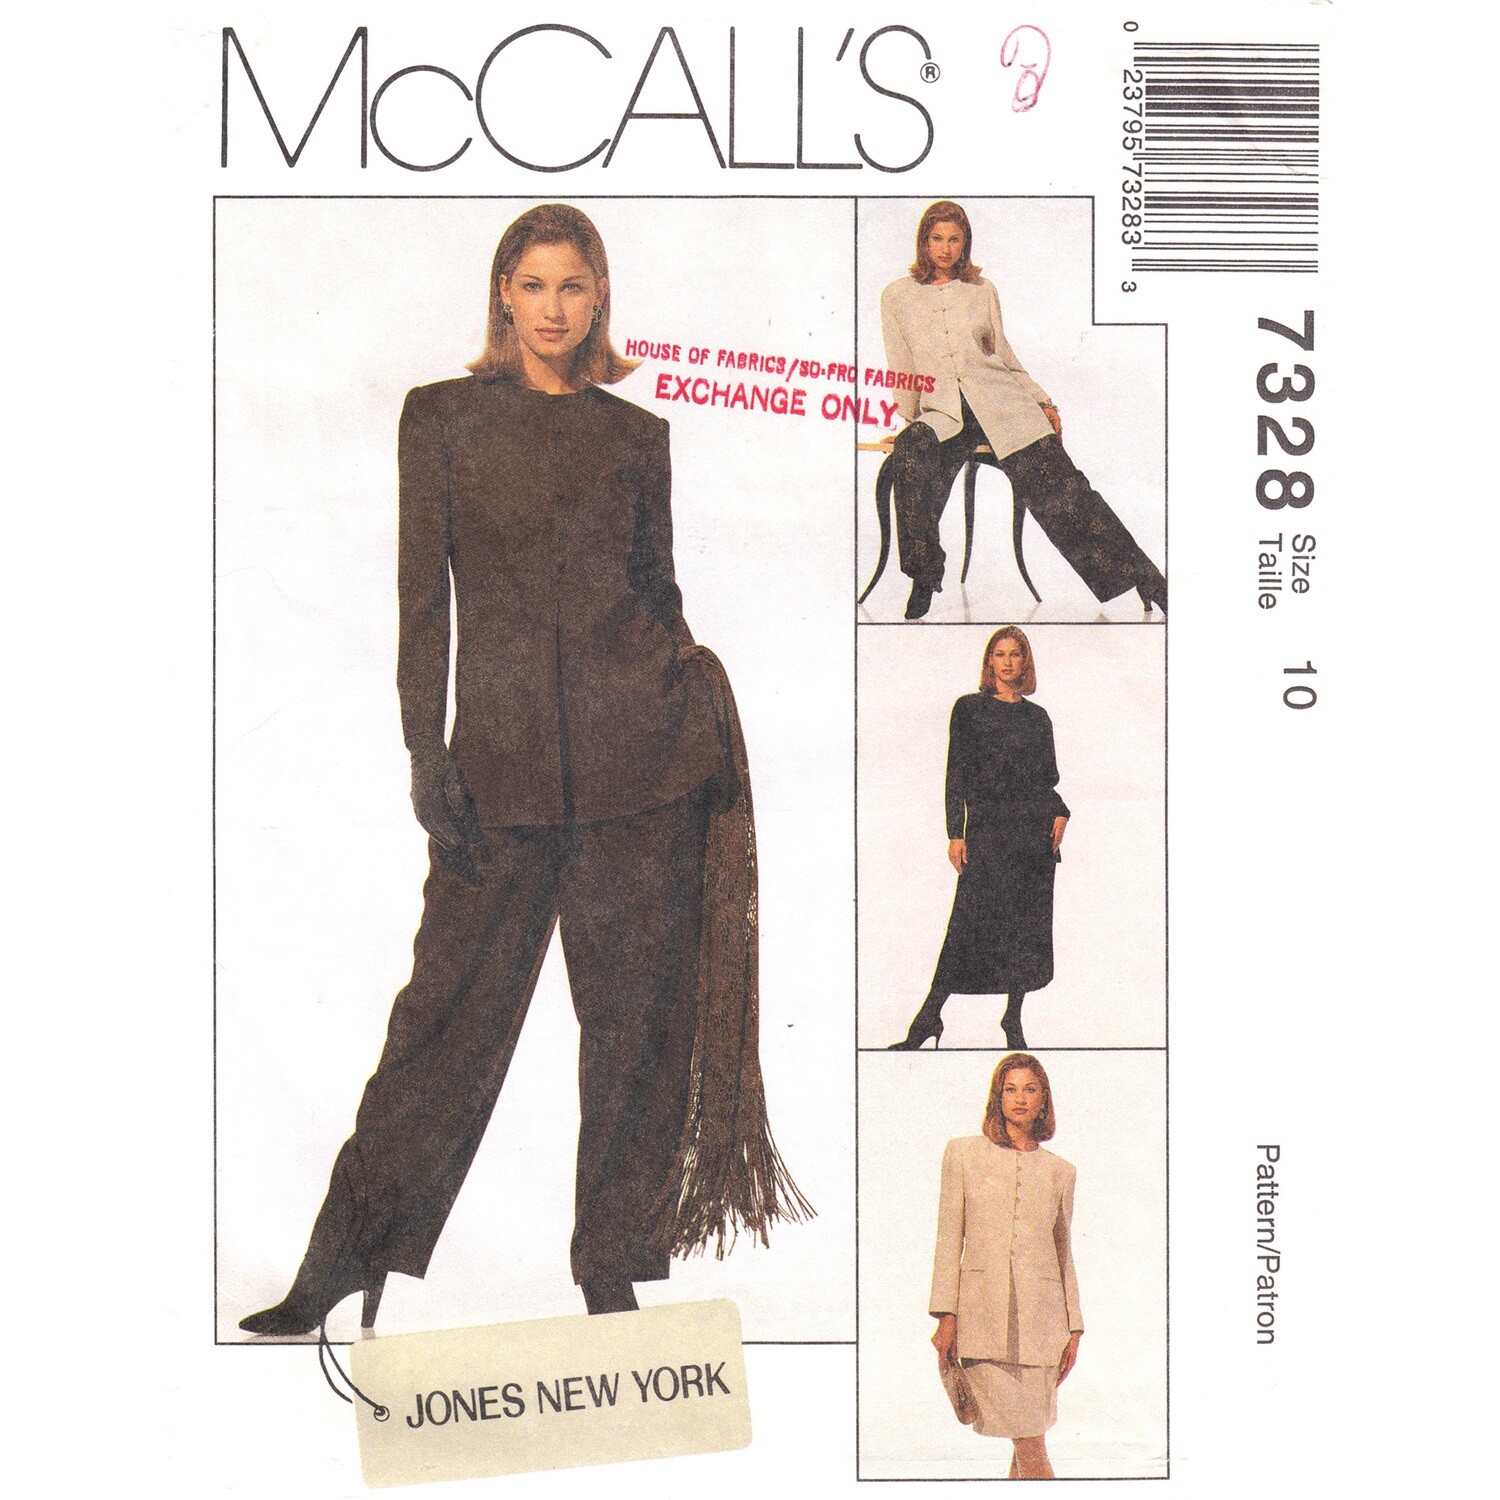 McCalls 7328 pattern